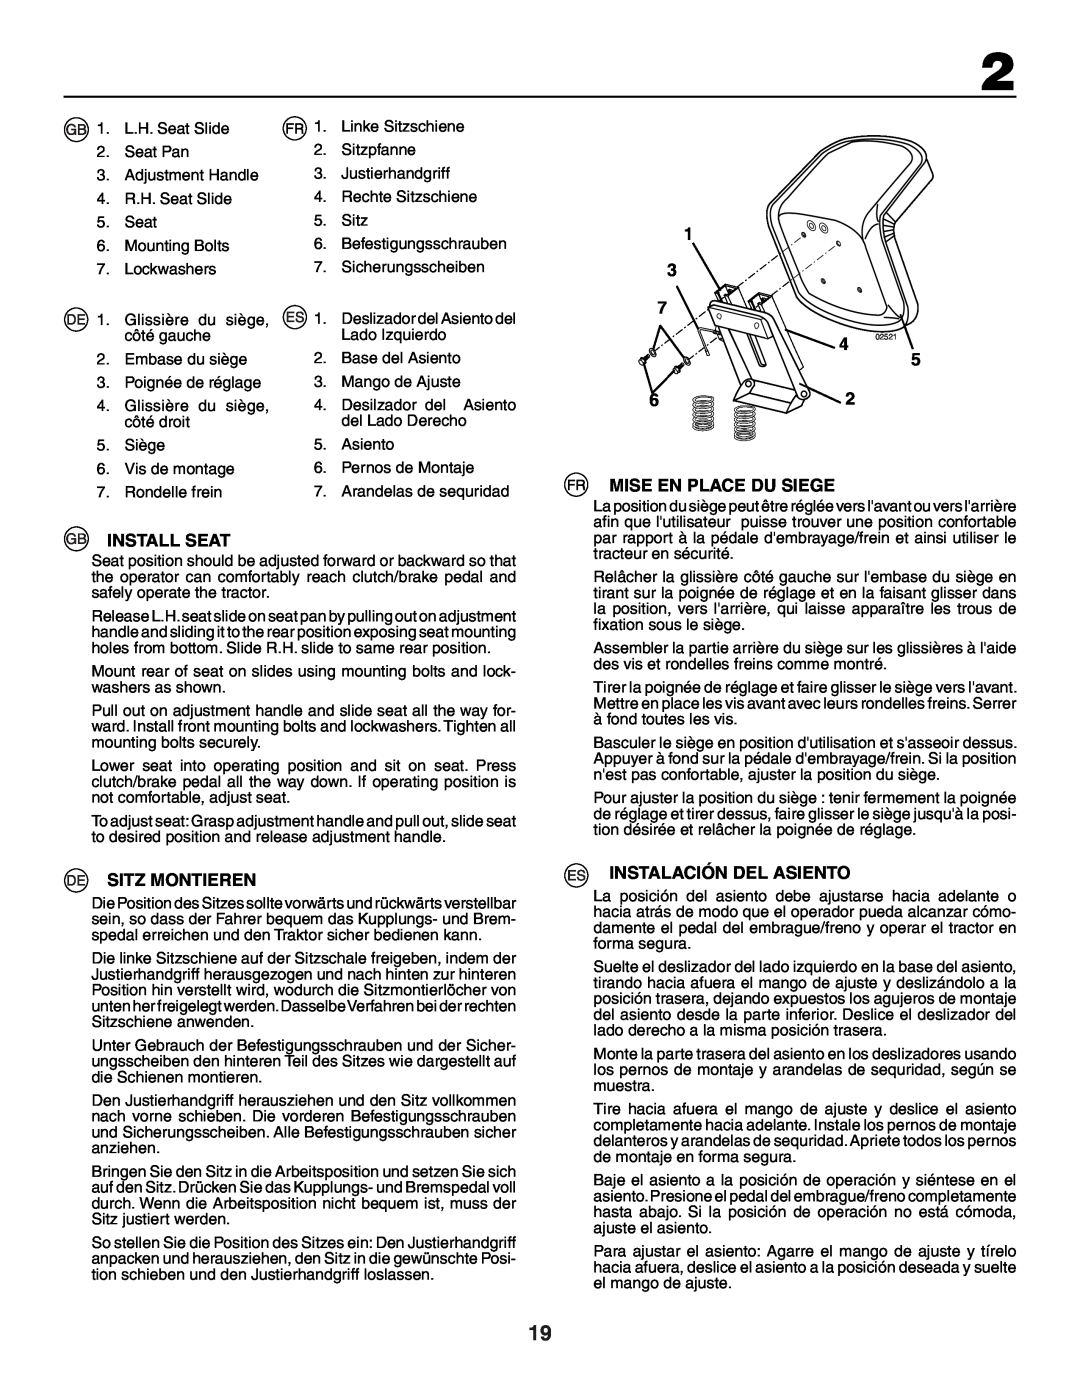 Husqvarna GTH250XP instruction manual Install Seat, Sitz Montieren, Mise En Place Du Siege, Instalación Del Asiento 